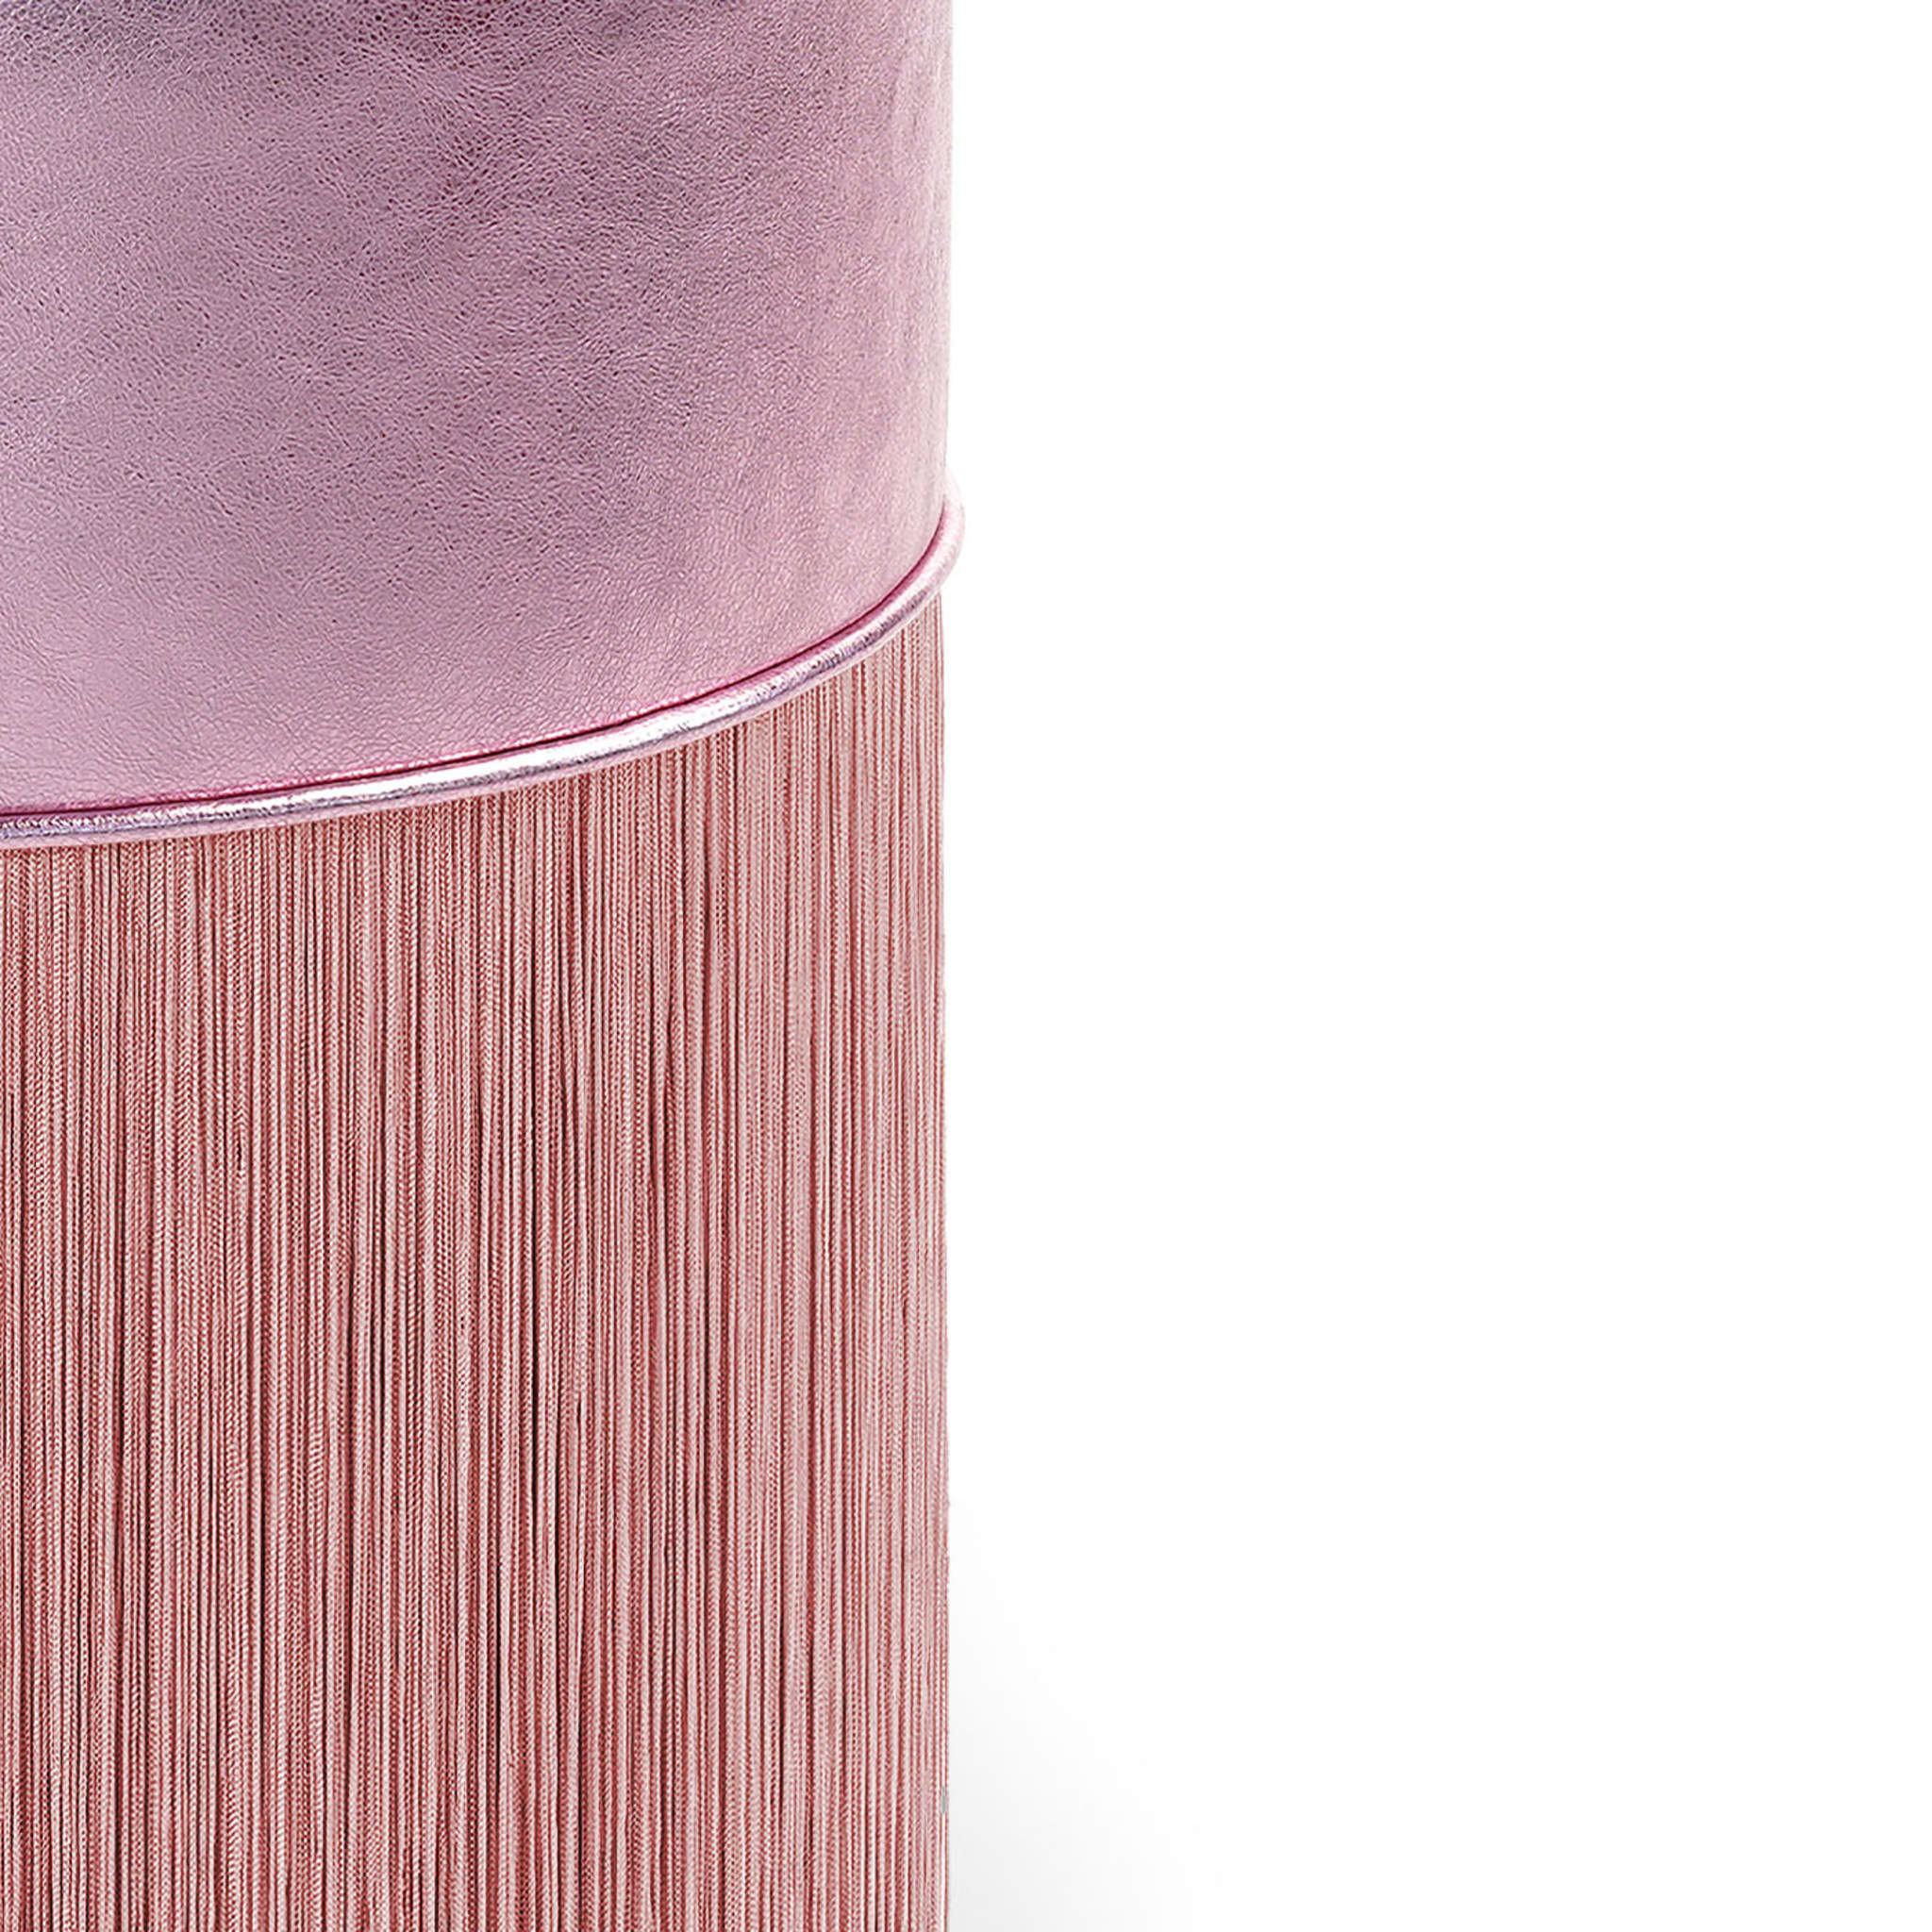 Gleaming Pink Metallic Leather Pouf #2 By Lorenza Bozzoli - Alternative view 1